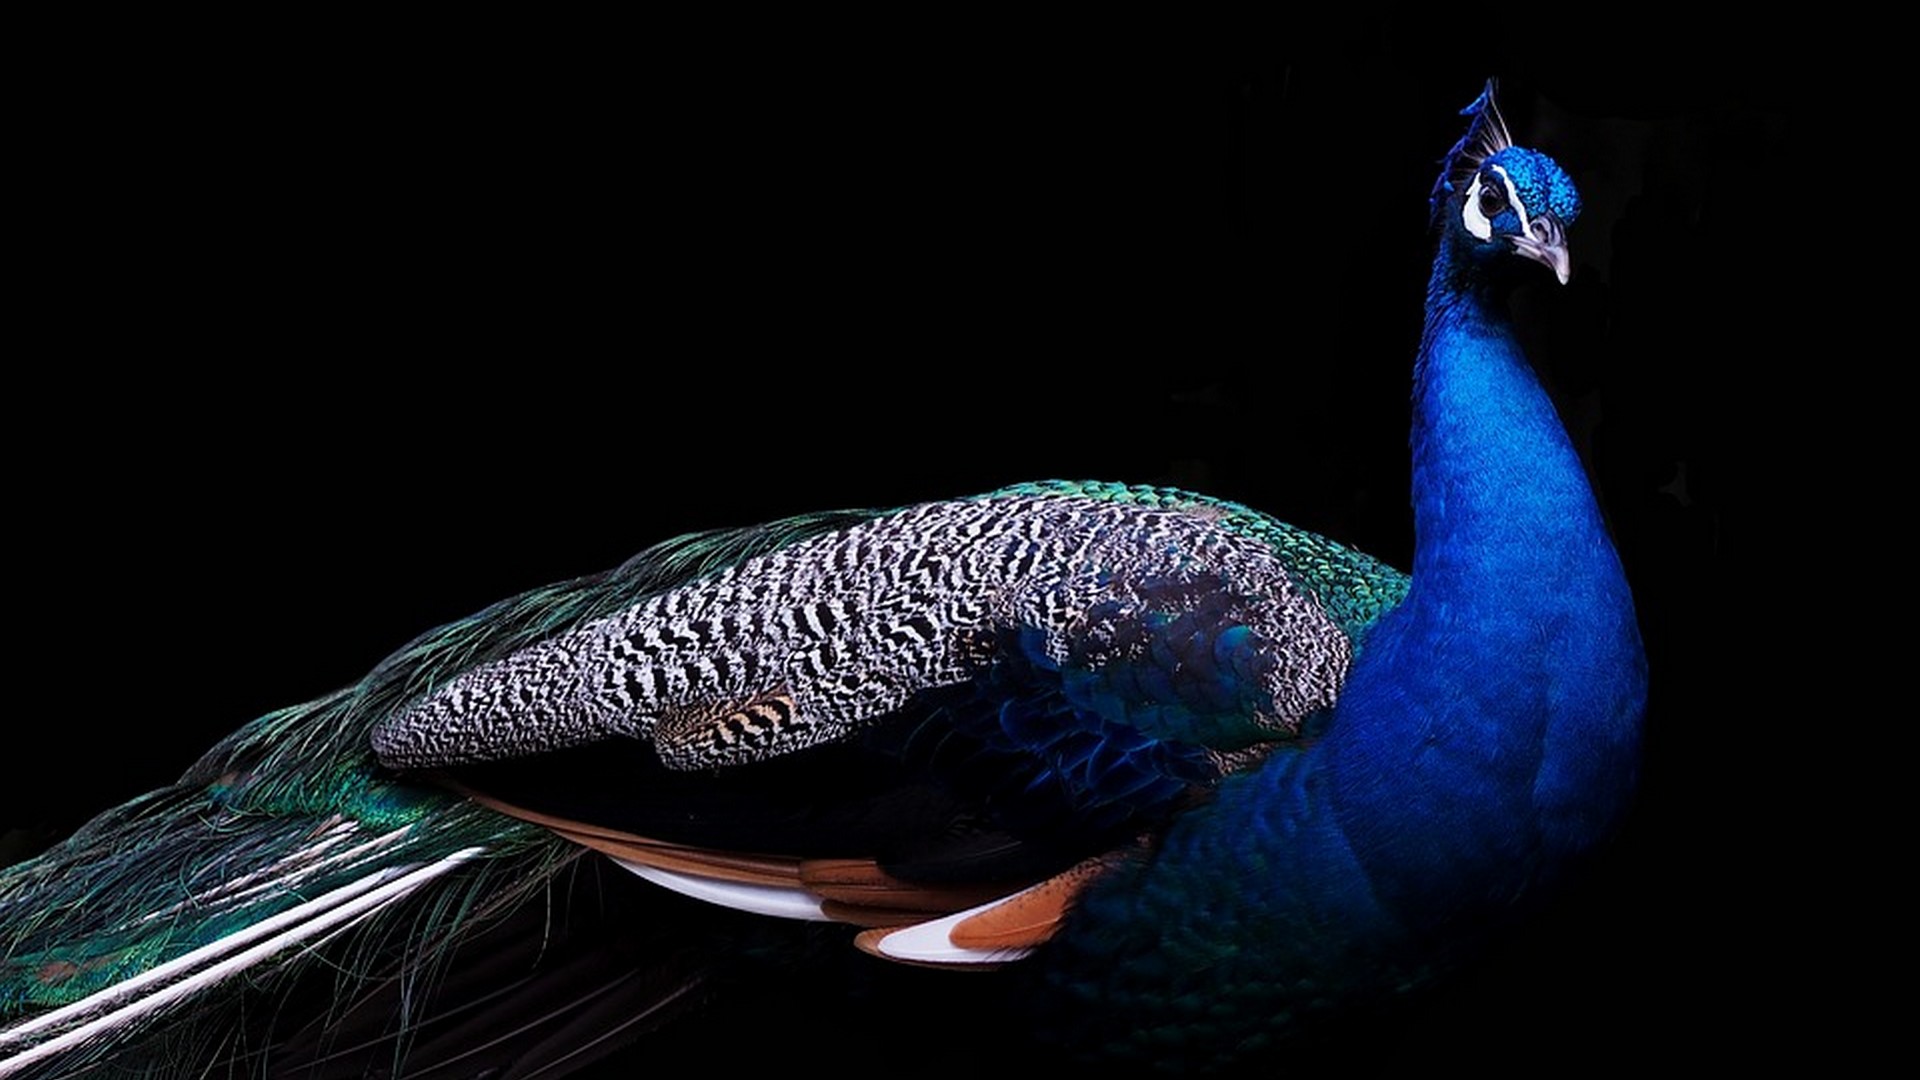 Hd Peacock Bird Wallpaper - Peacock With Dark Background - HD Wallpaper 